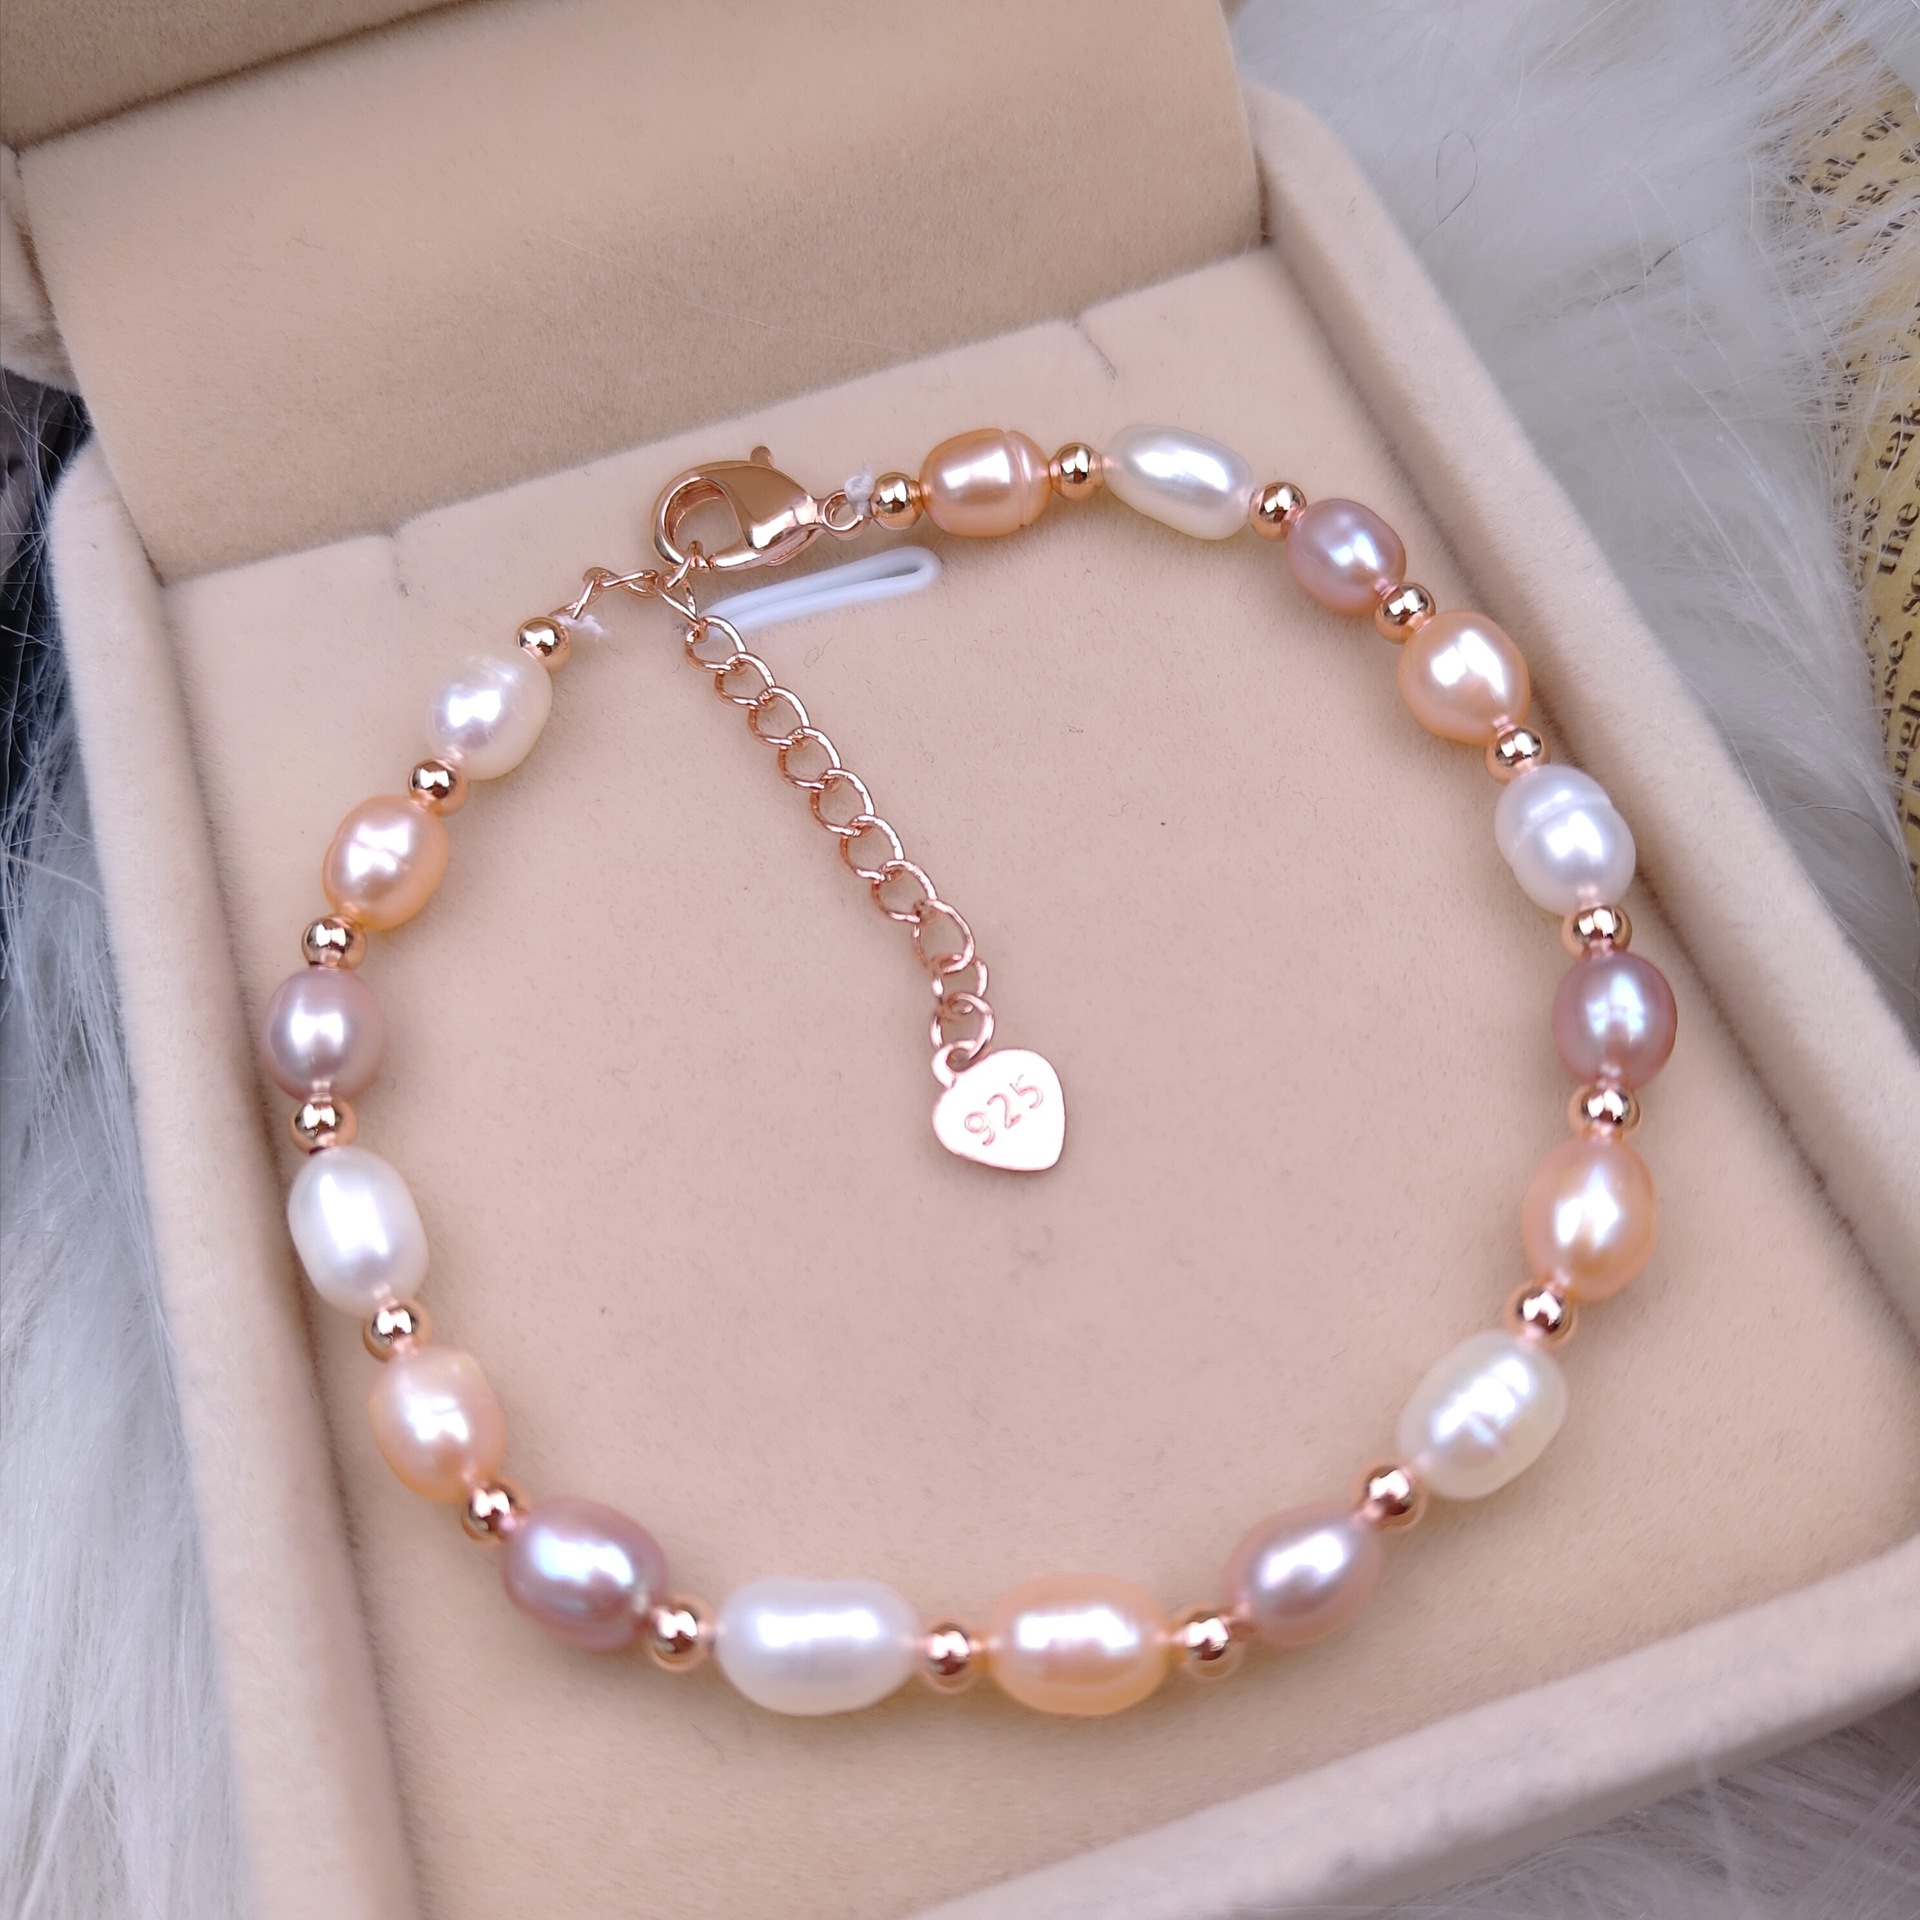 Simple pearl bracelet tutorial - A little love everyday!